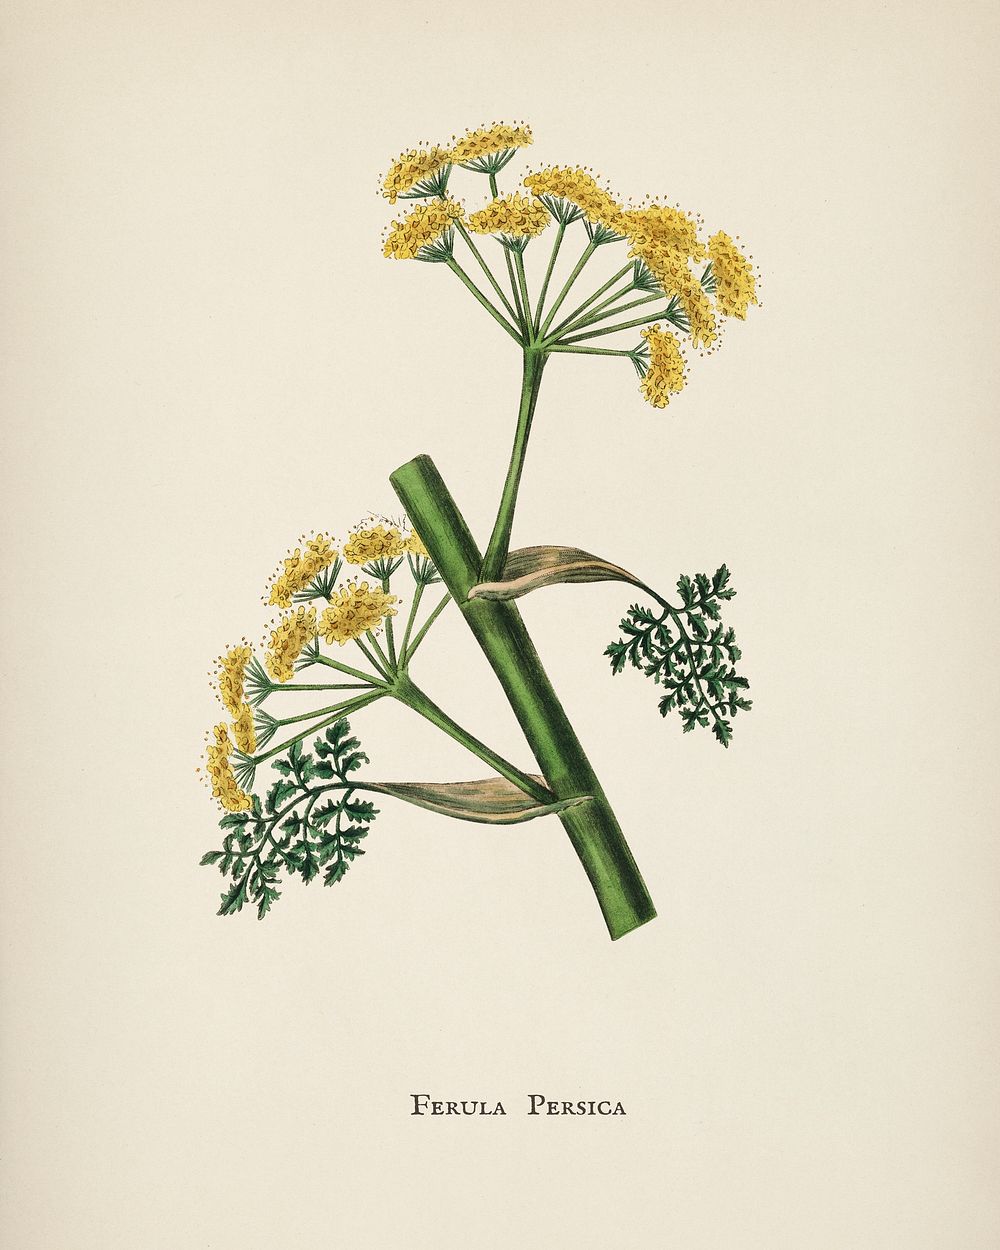 Ferula persica illustration from Medical Botany (1836) by John Stephenson and James Morss Churchill.